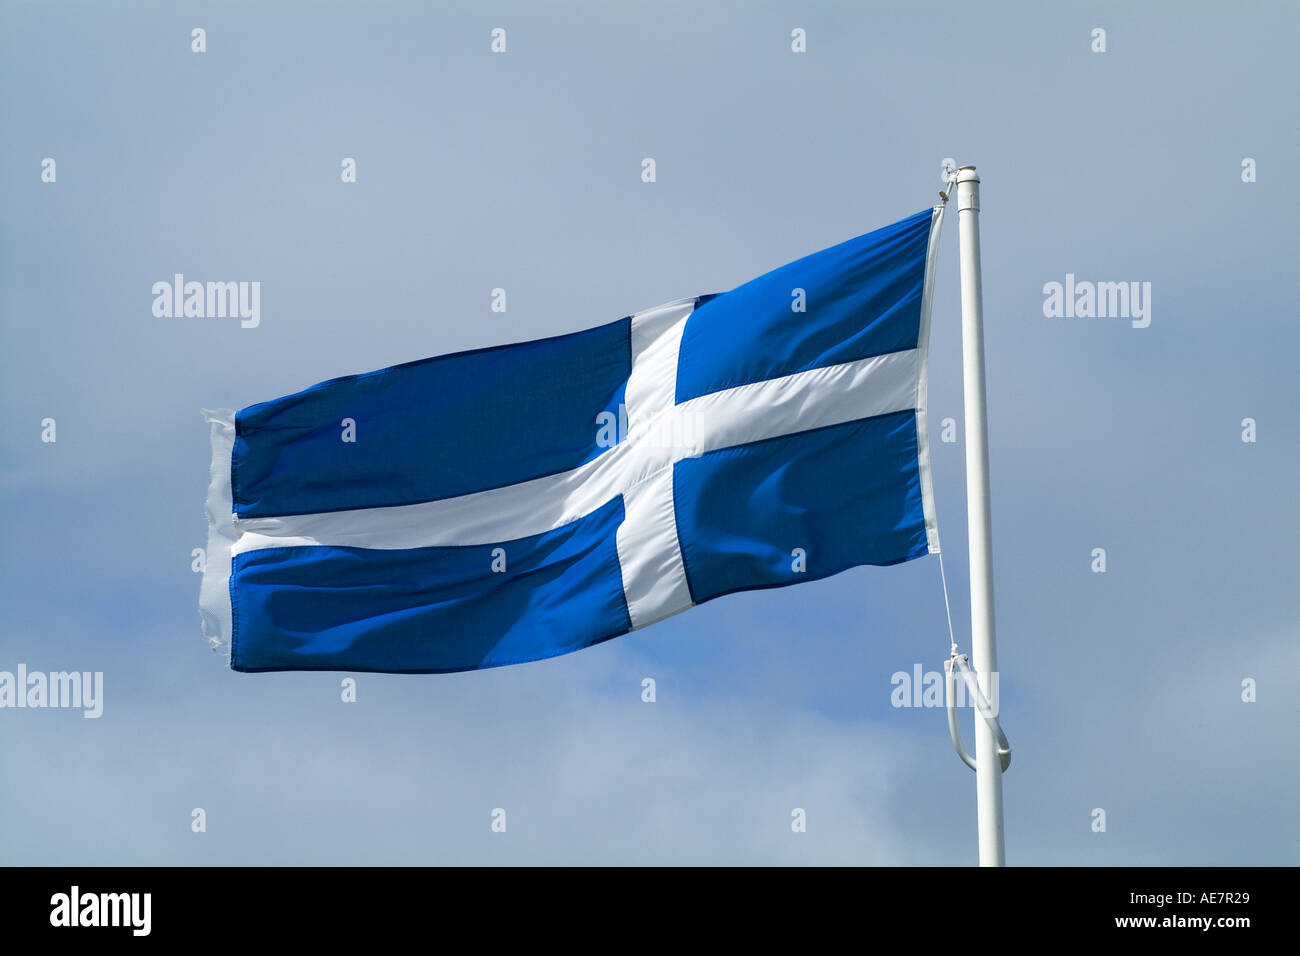 Dh Flagge Shetland Weisses Kreuz Auf Blauem Grund Shetland Flagge Offizieller Standard Stockfotografie Alamy